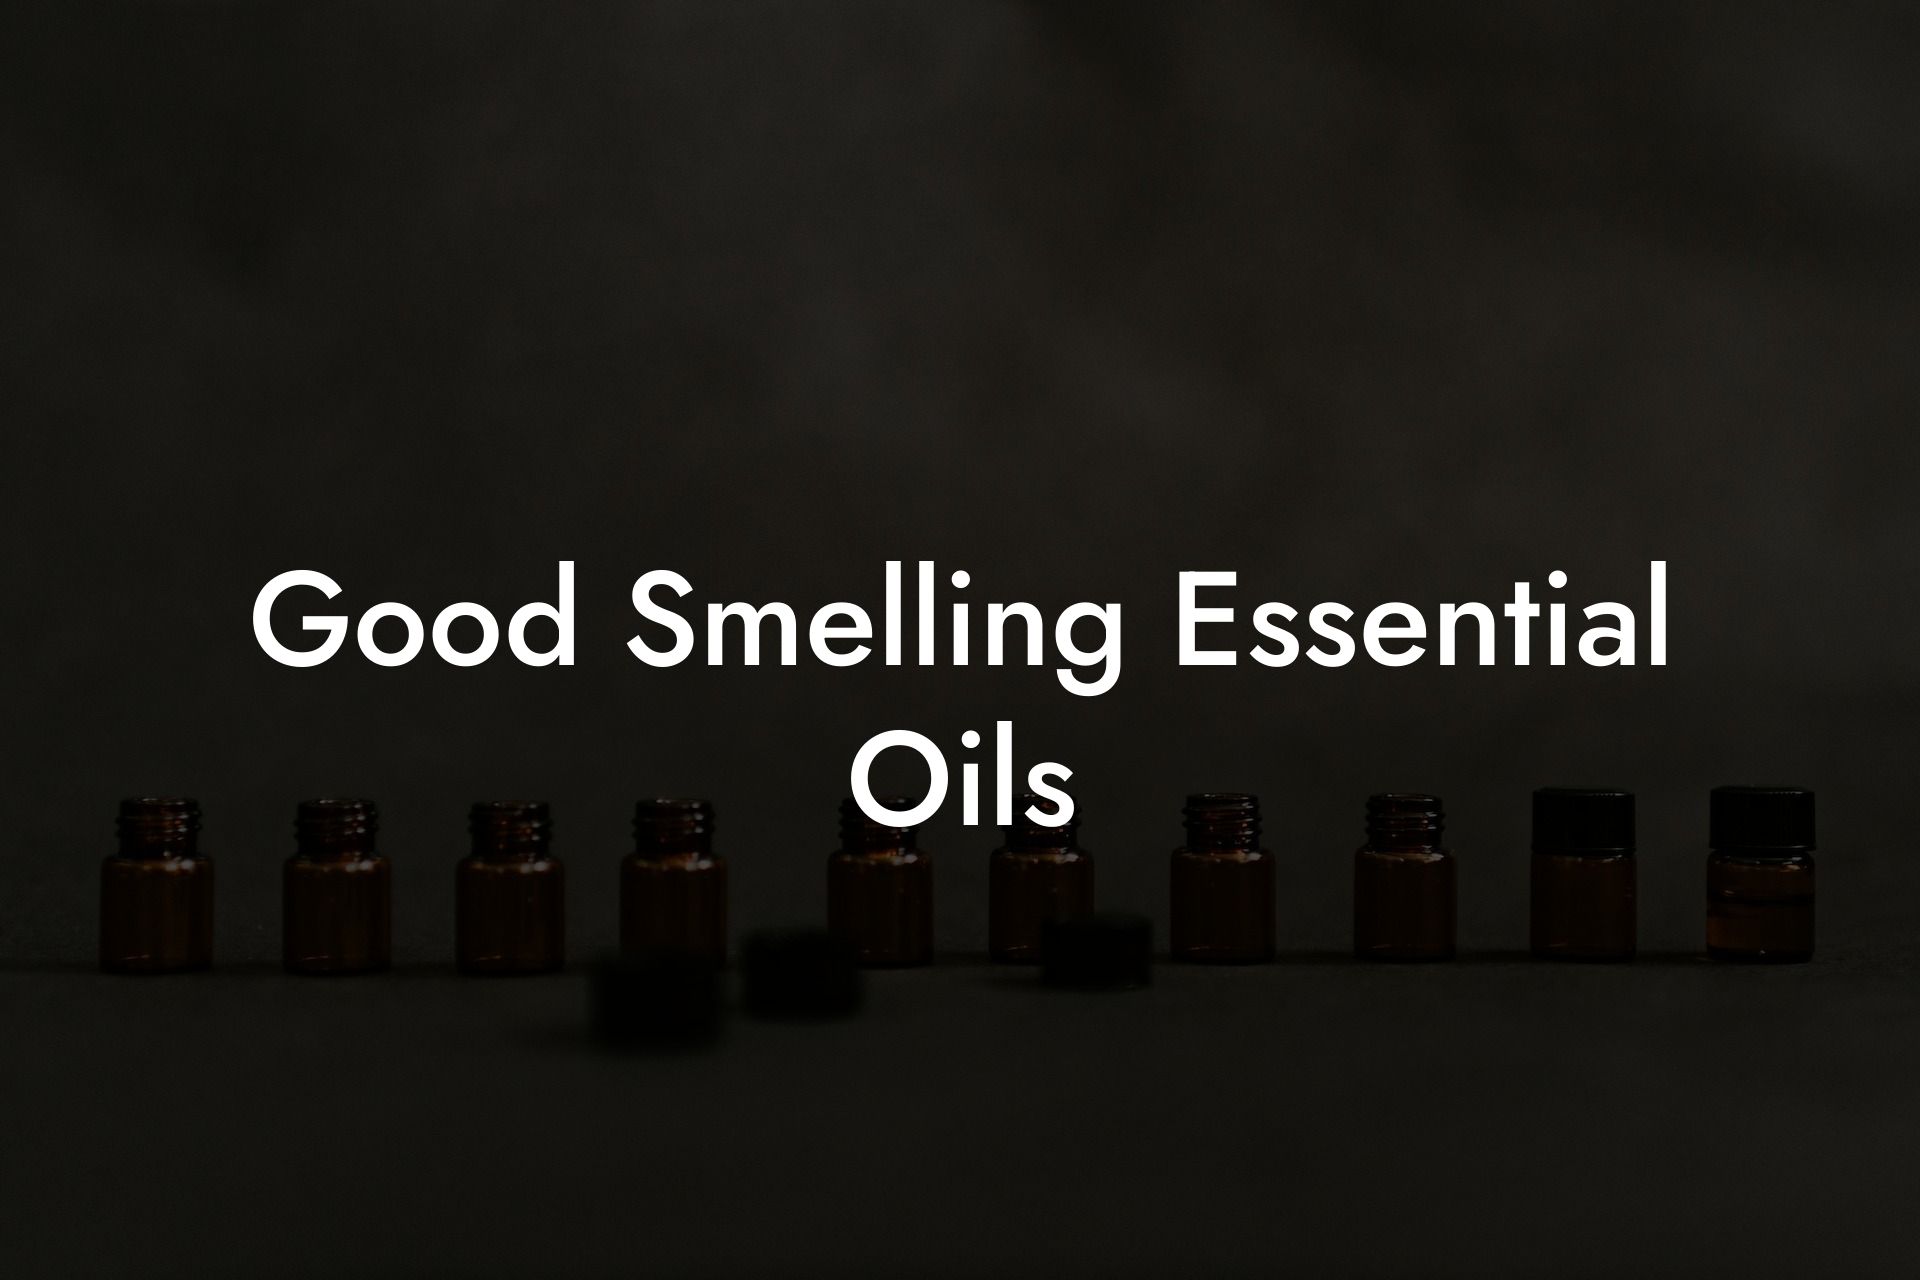 Good Smelling Essential Oils